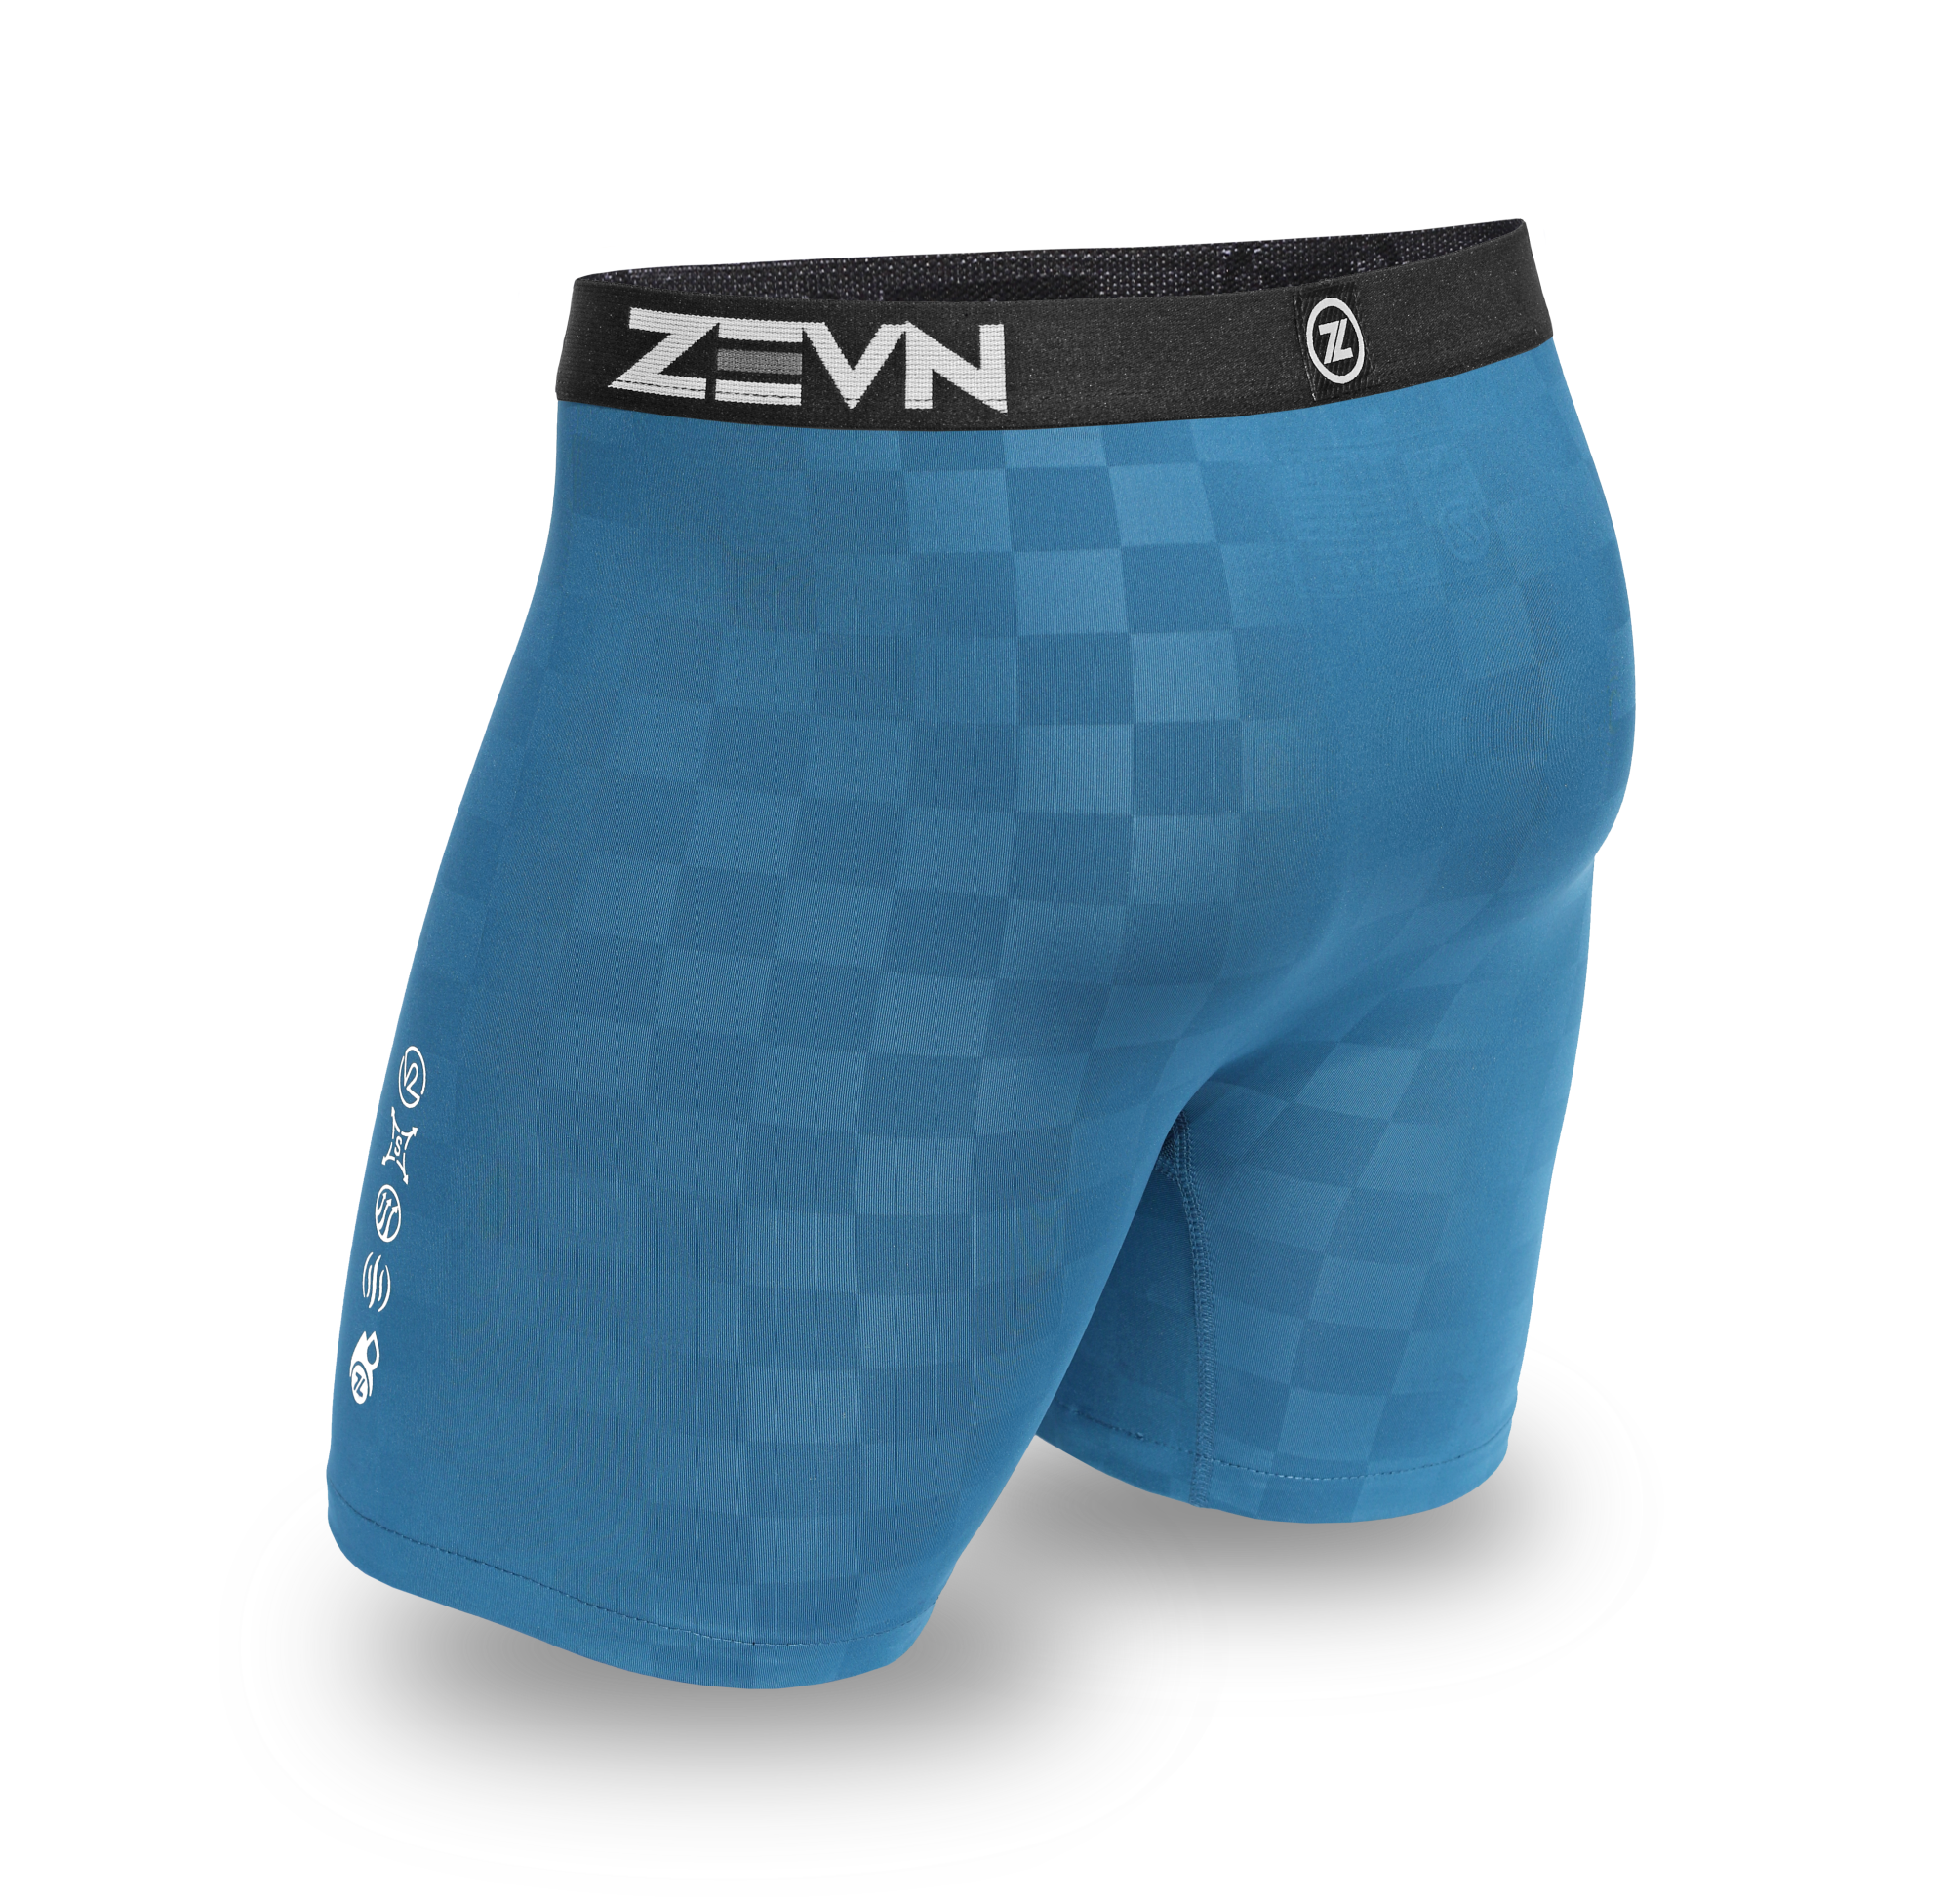 Anti Odor Underwear For Women: ZVW Airmesh ZEVN – ZEVN USA Sports Underwear